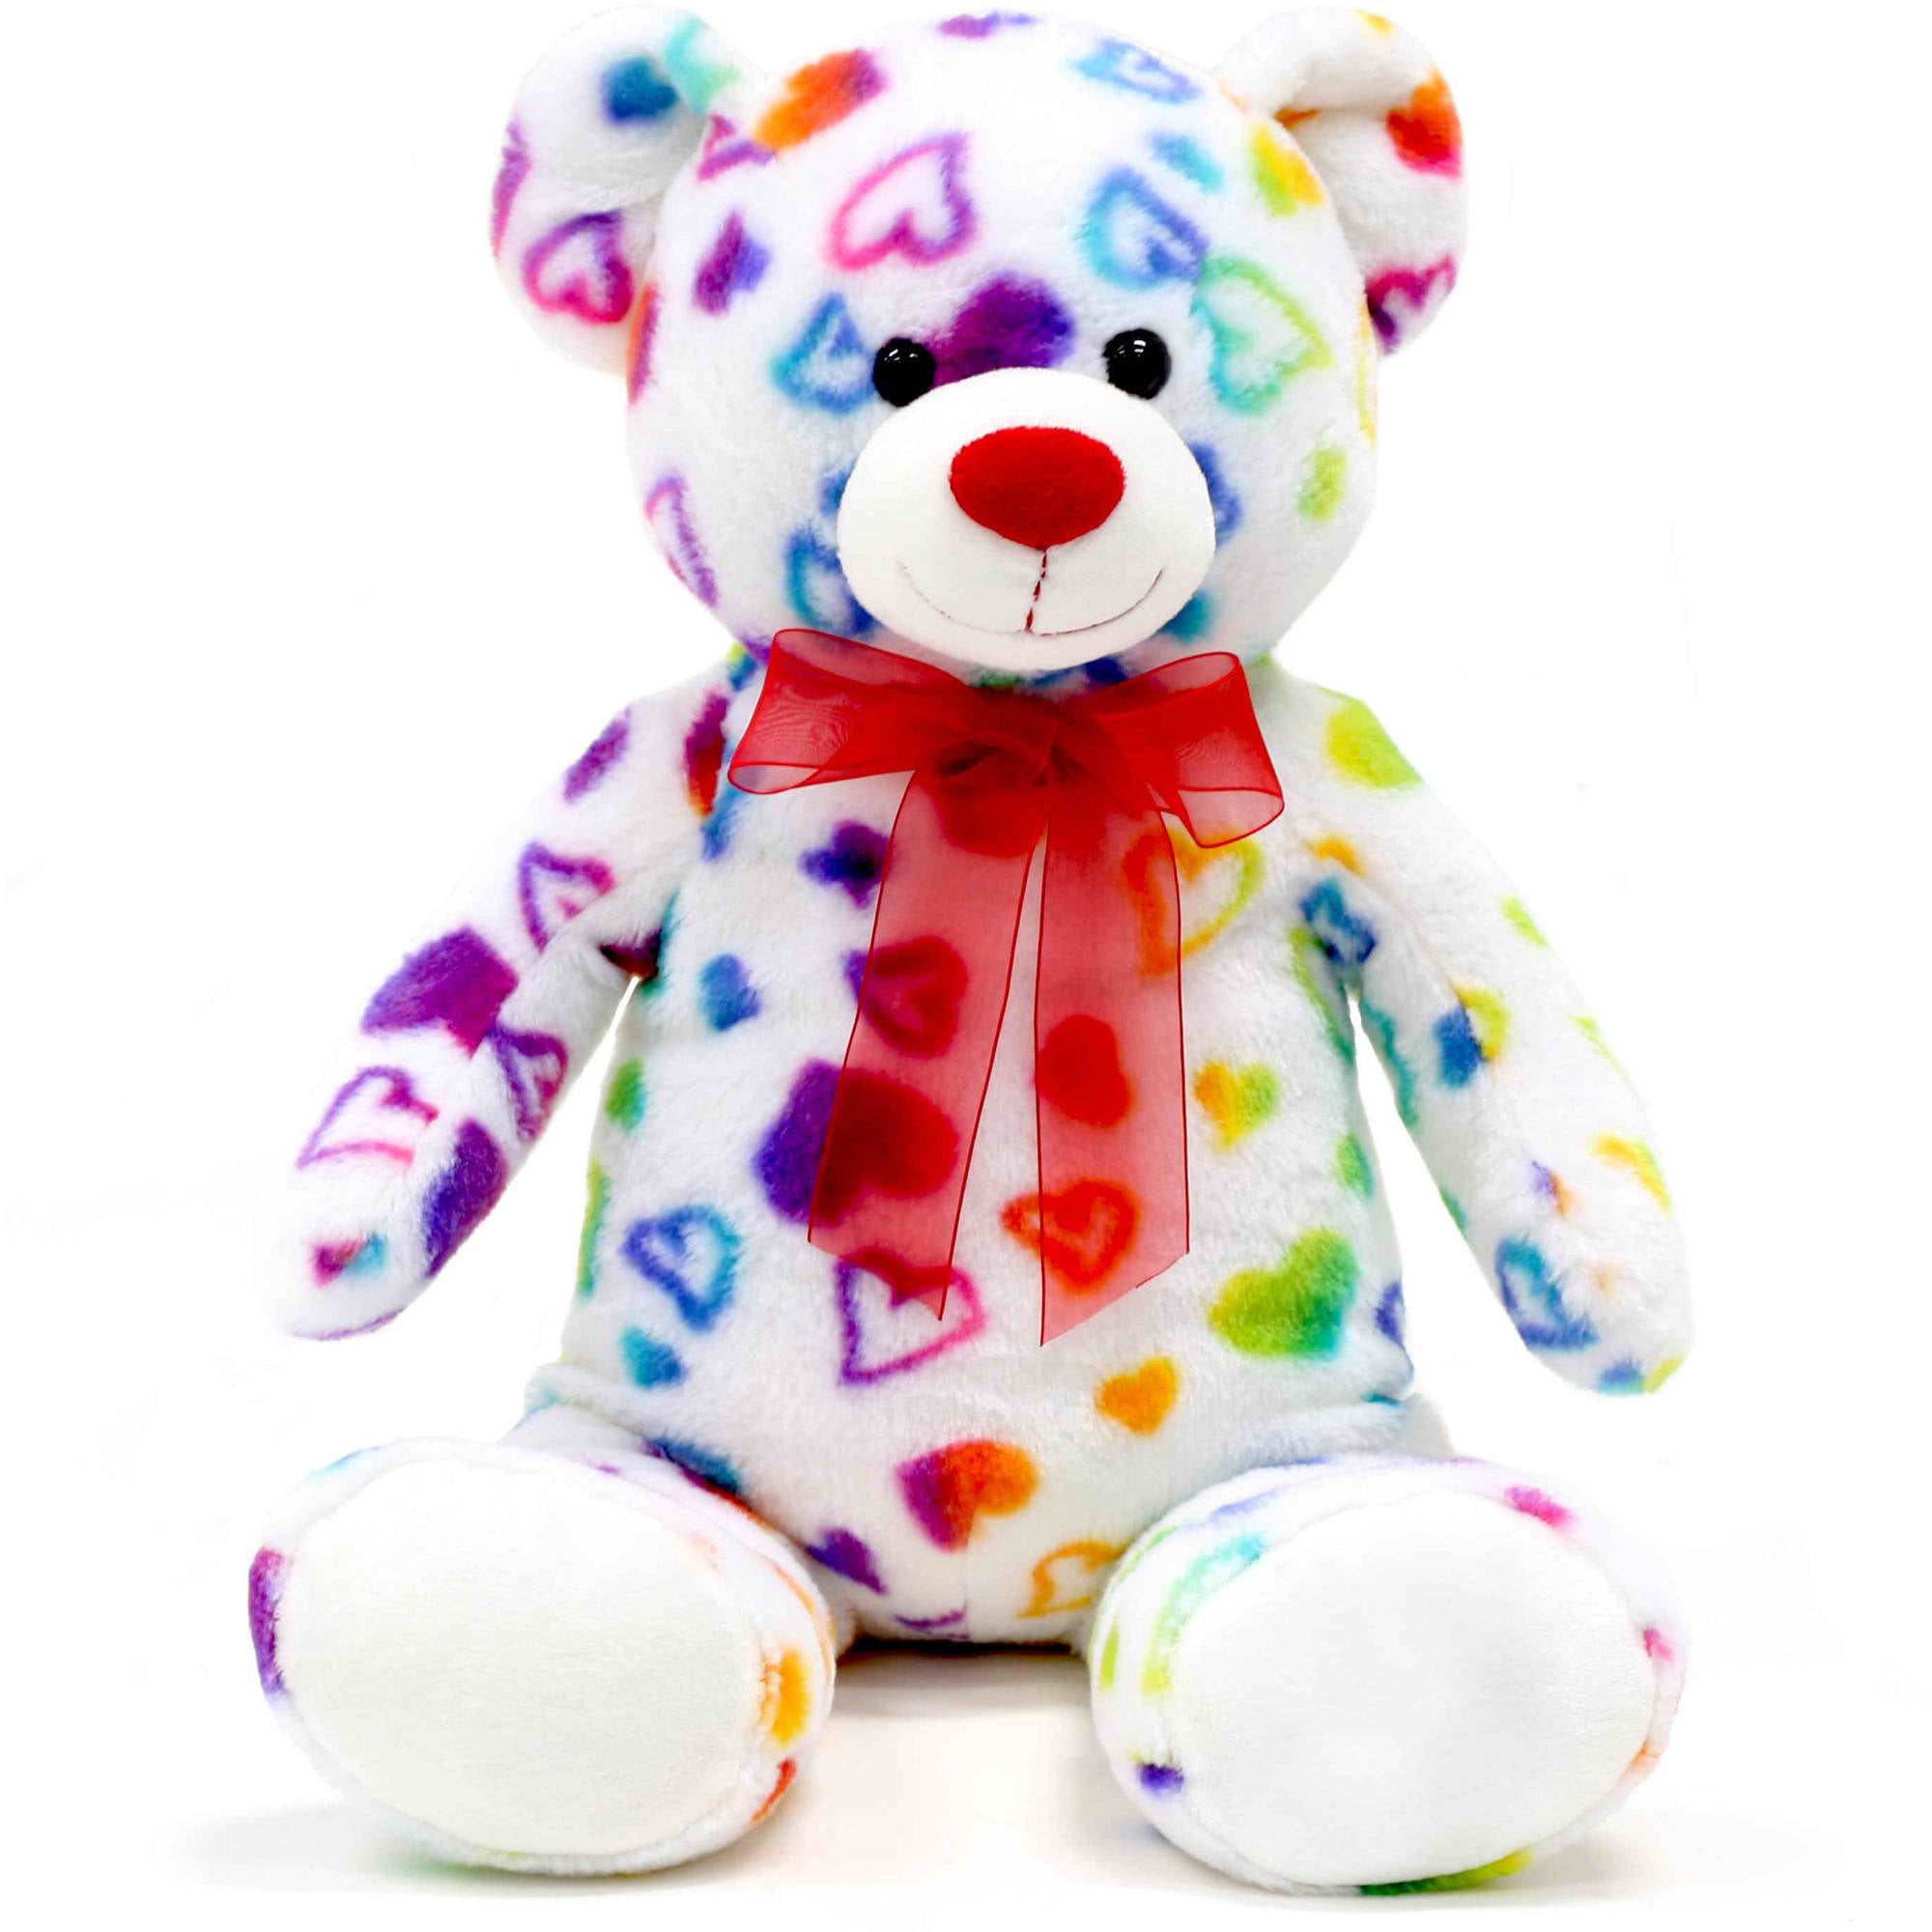 big valentine teddy bear walmart